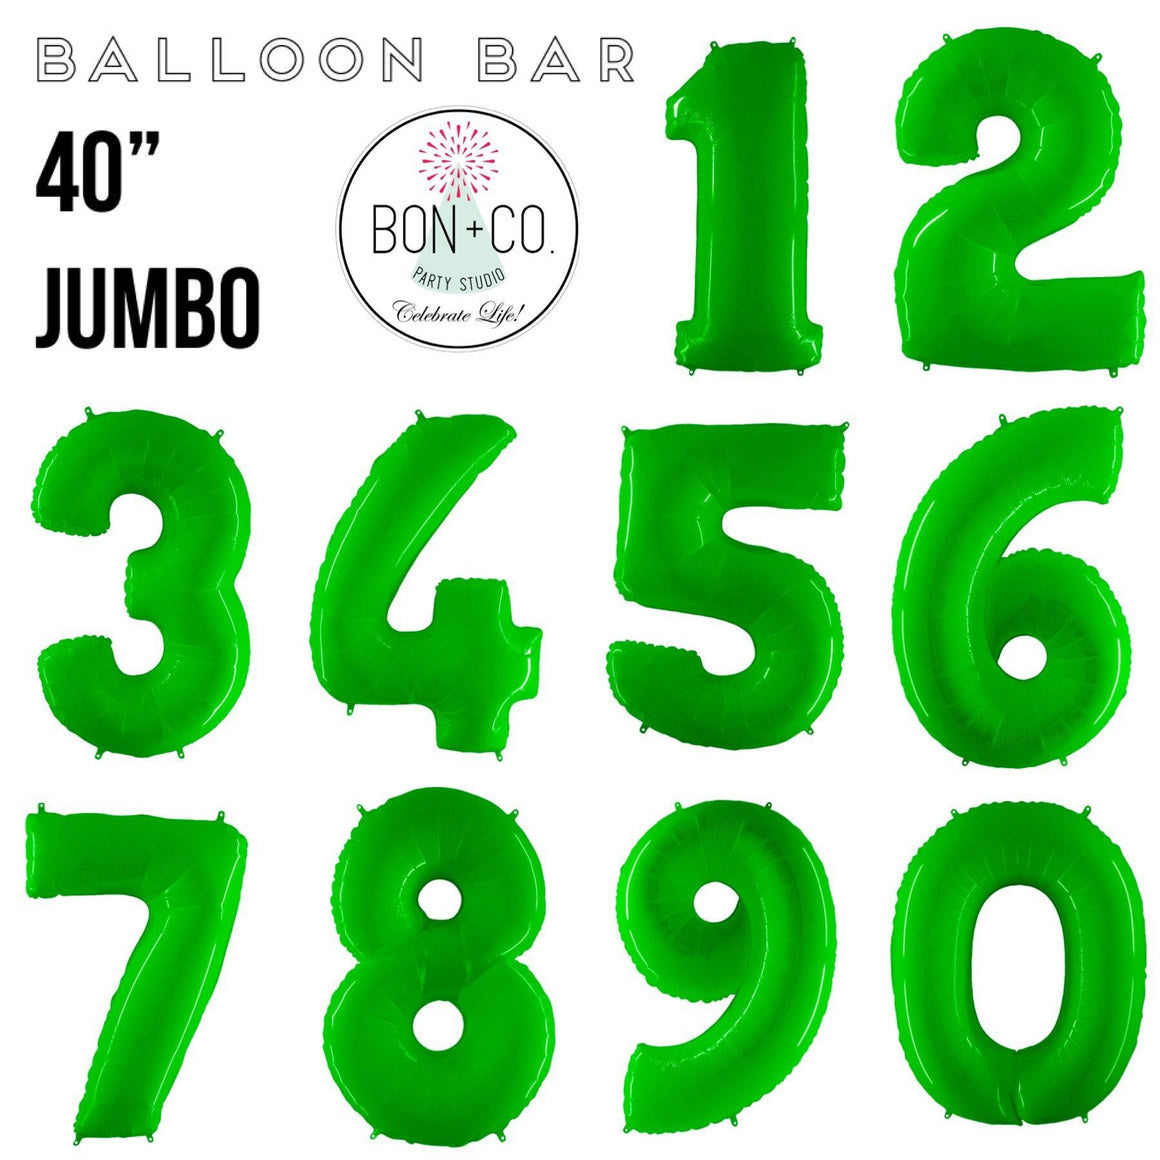 BALLOON BAR - 40" JUMBO NUMBER BRIGHT LIME, Balloons, bargain balloons - Bon + Co. Party Studio